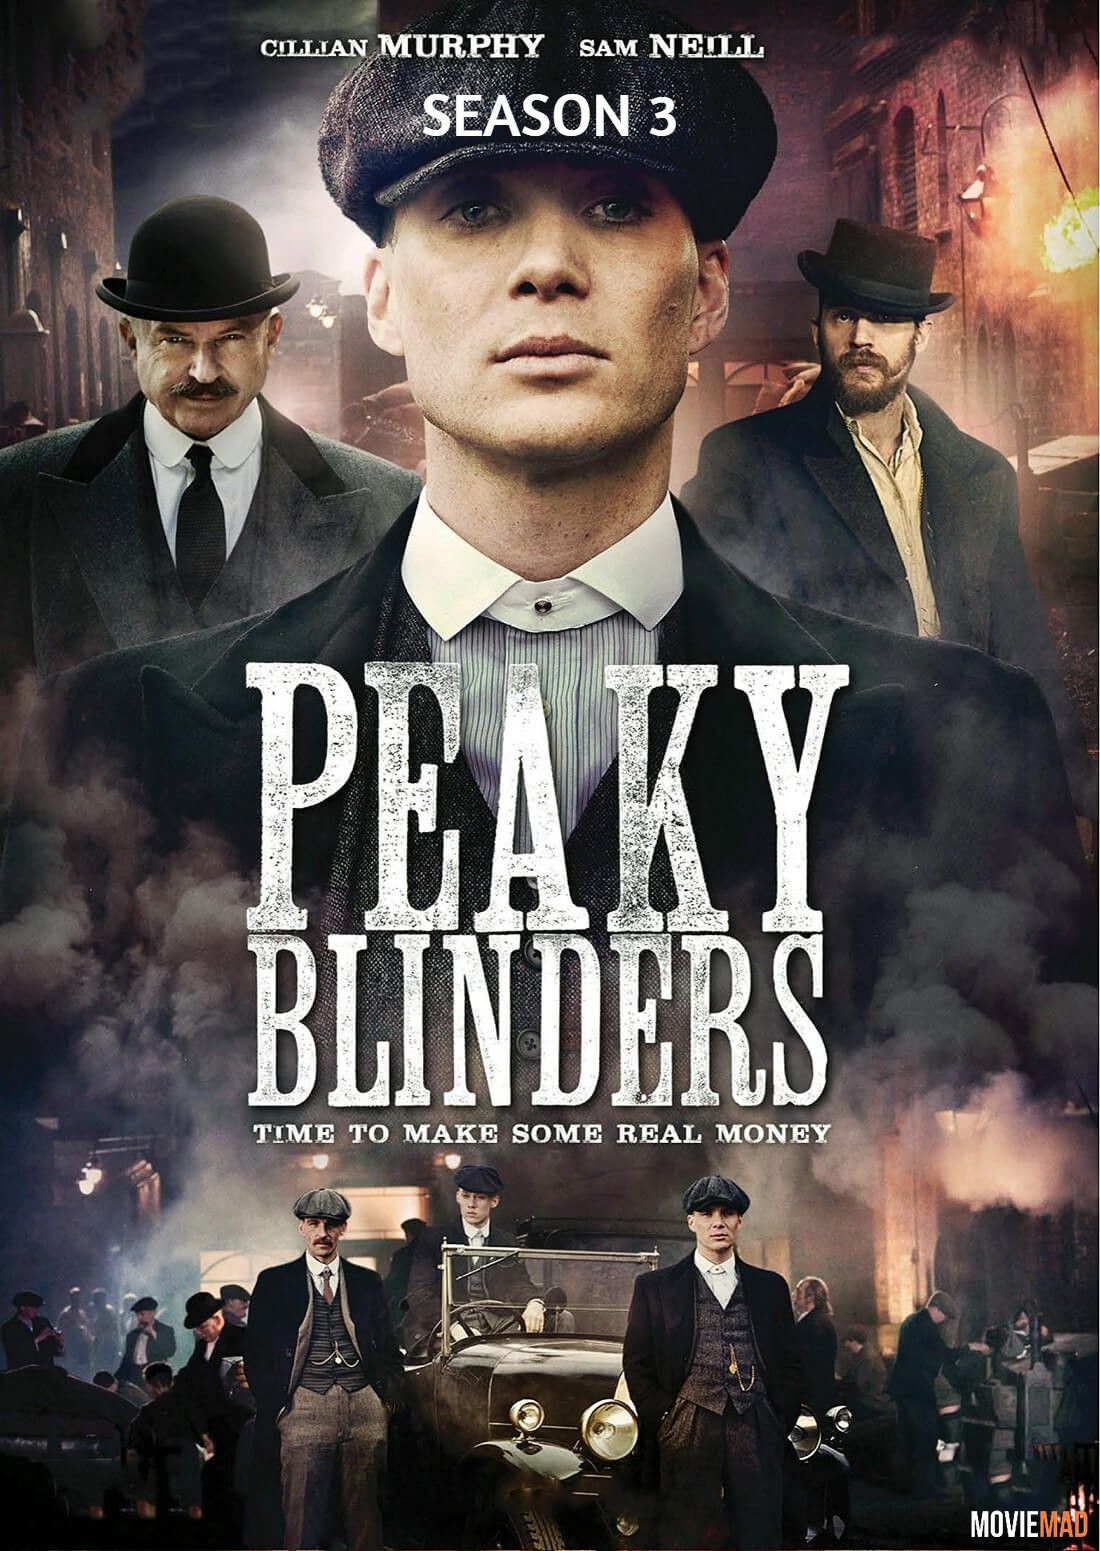 Peaky Blinders S03 (2016) English Netflix WEB Series HDRip 720p 480p